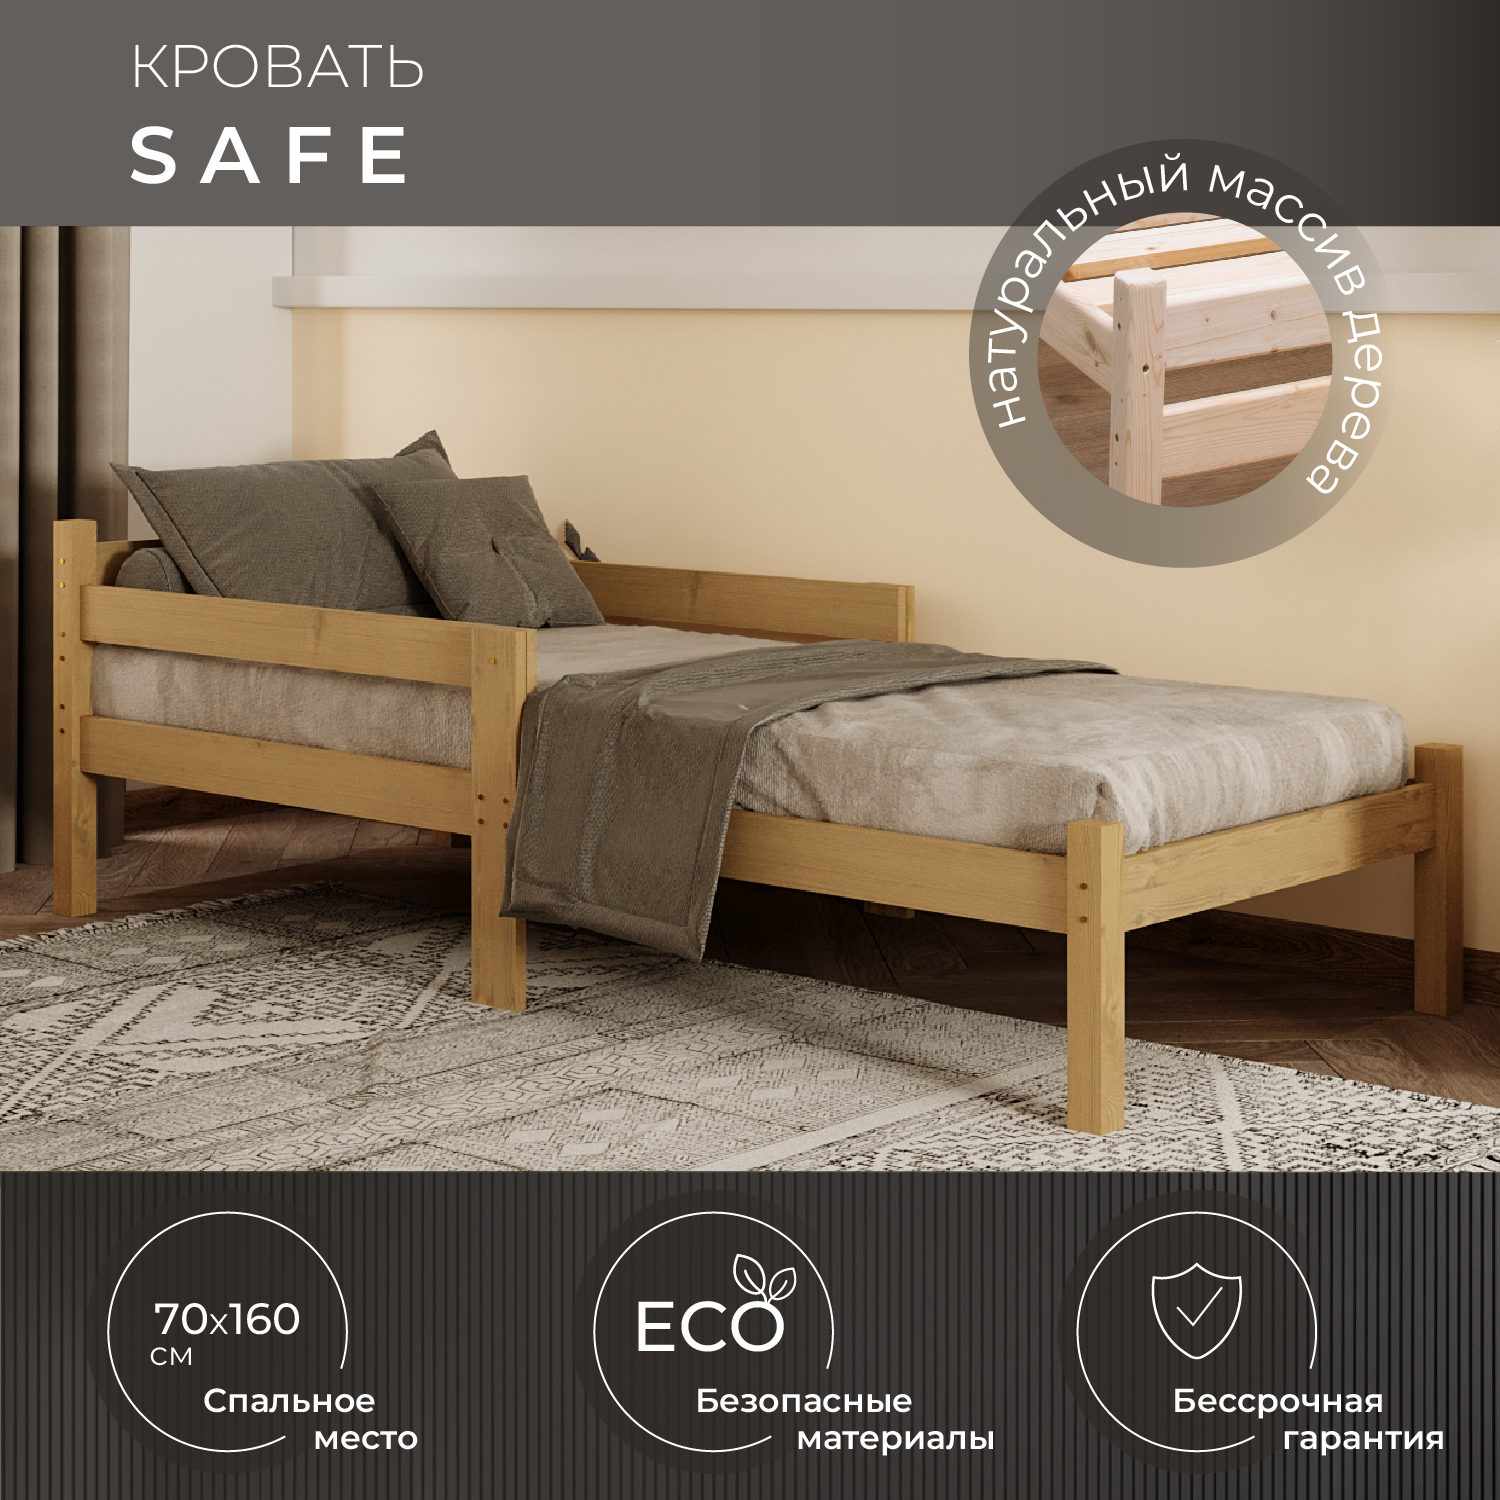 Кровать Новирон Safe 70х160 см